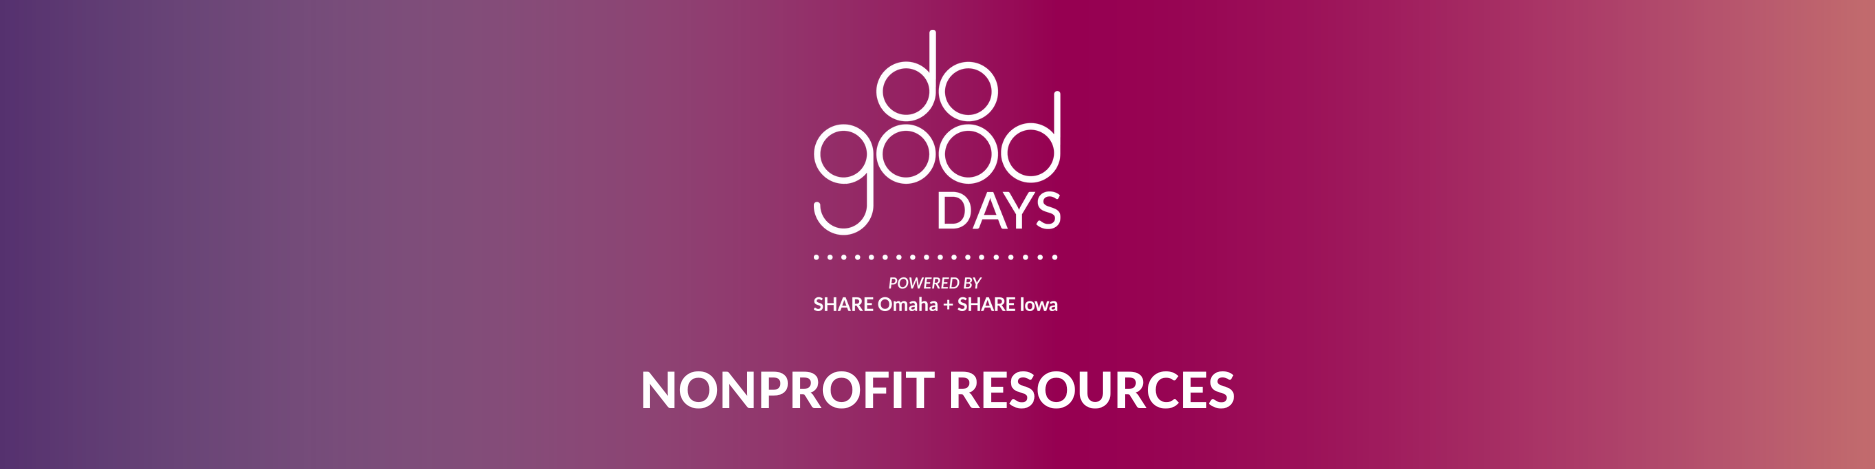 Do Good Days Nonprofit Resources